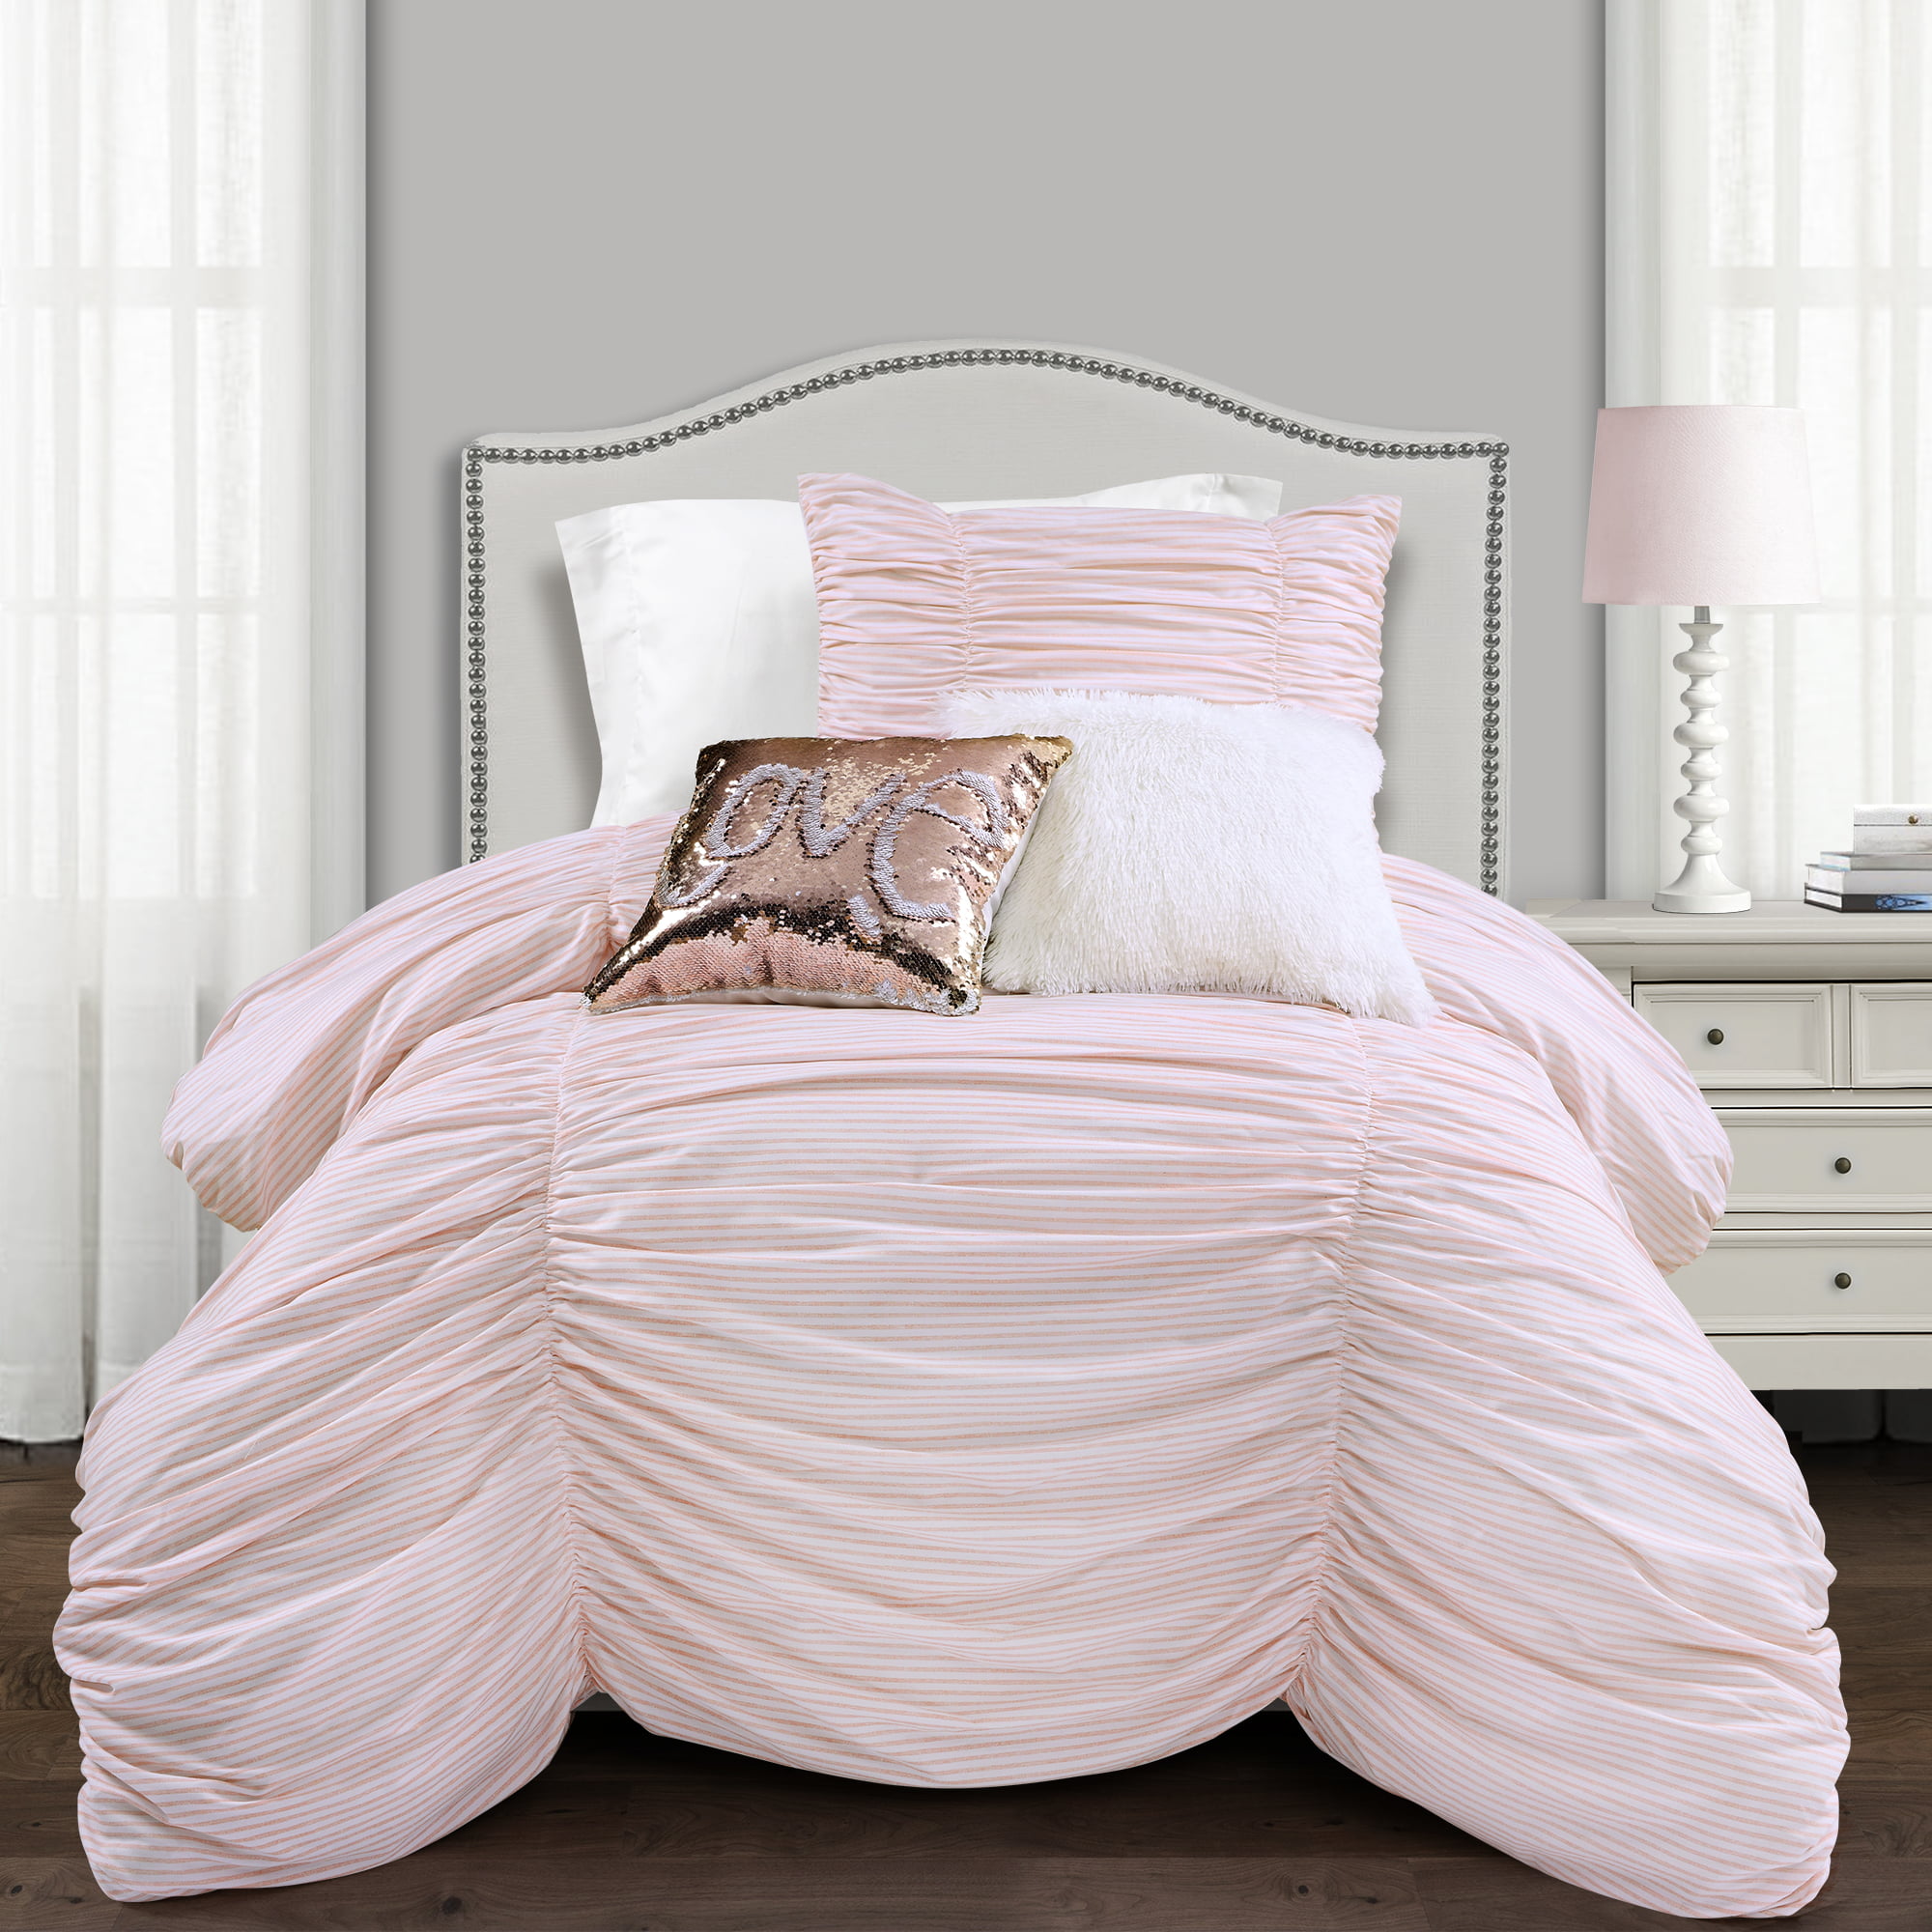 Ruching Ticking Stripe Comforter Set, Multiple Colors - Walmart.com